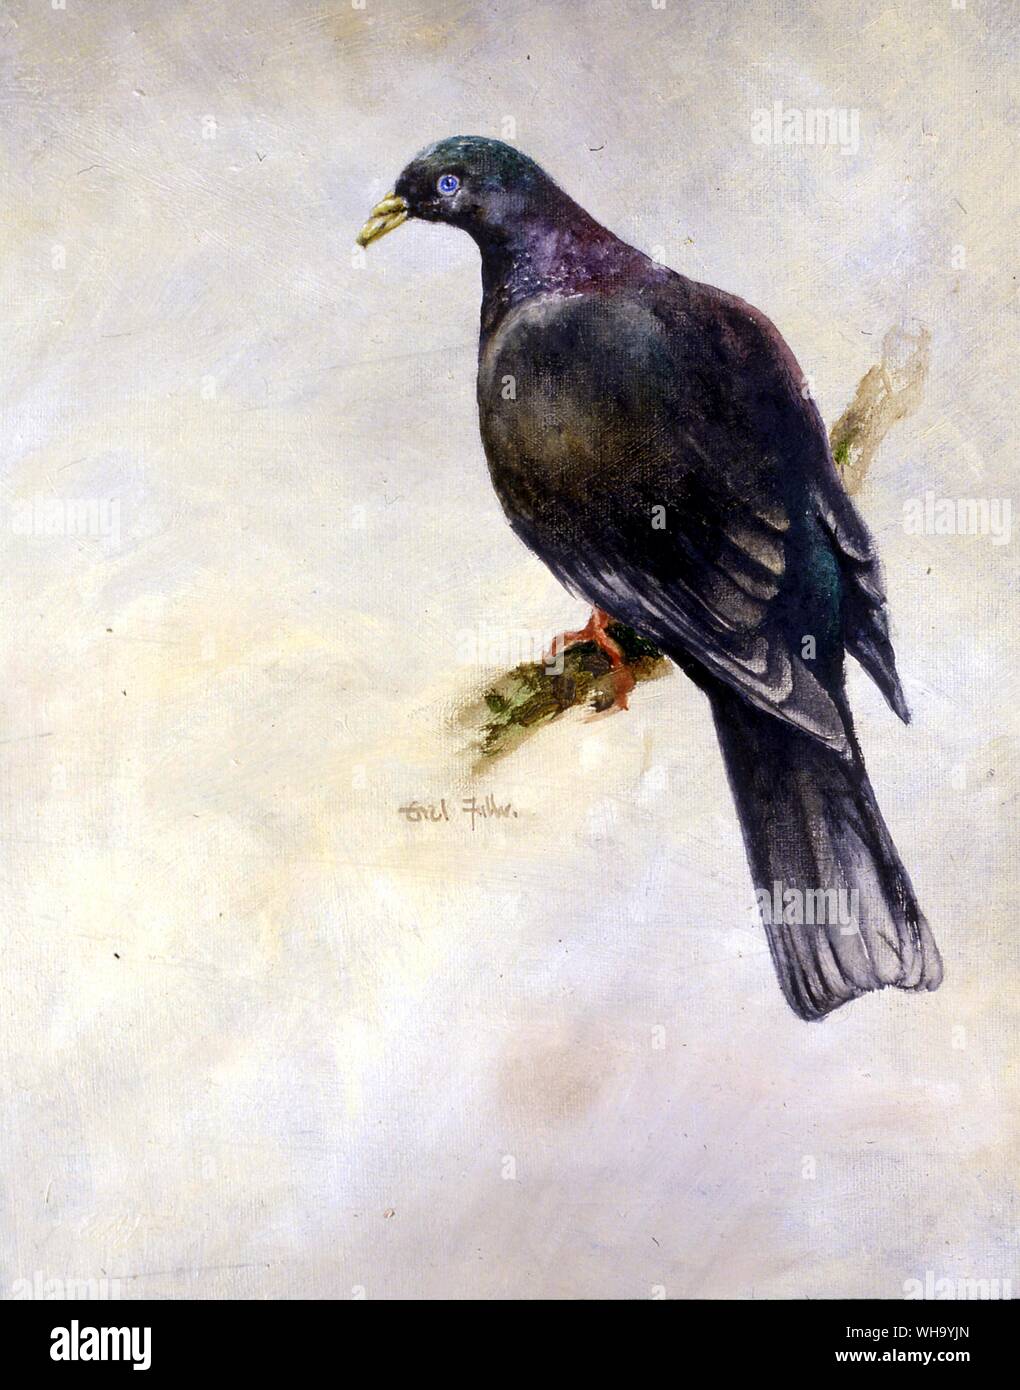 Bonin Wood Pigeon.  Oil painting by Errol Fuller - Length of bird 46cm (18in) Stock Photo